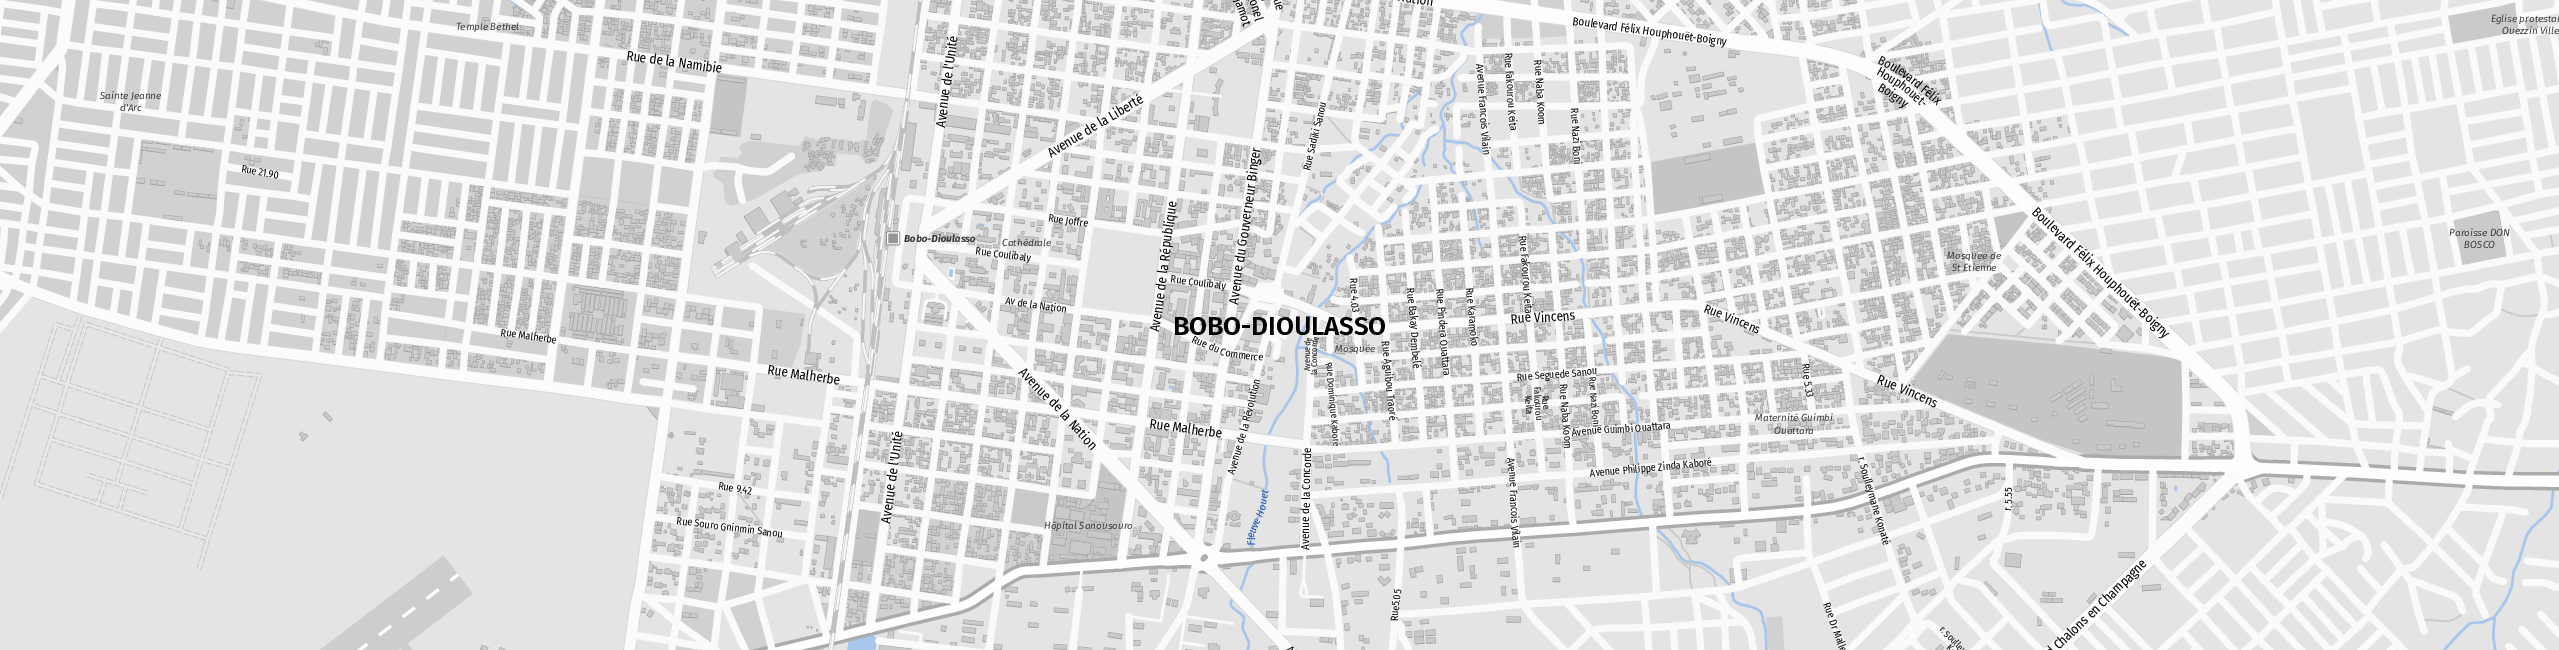 Stadtplan Bobo-Dioulasso zum Downloaden.